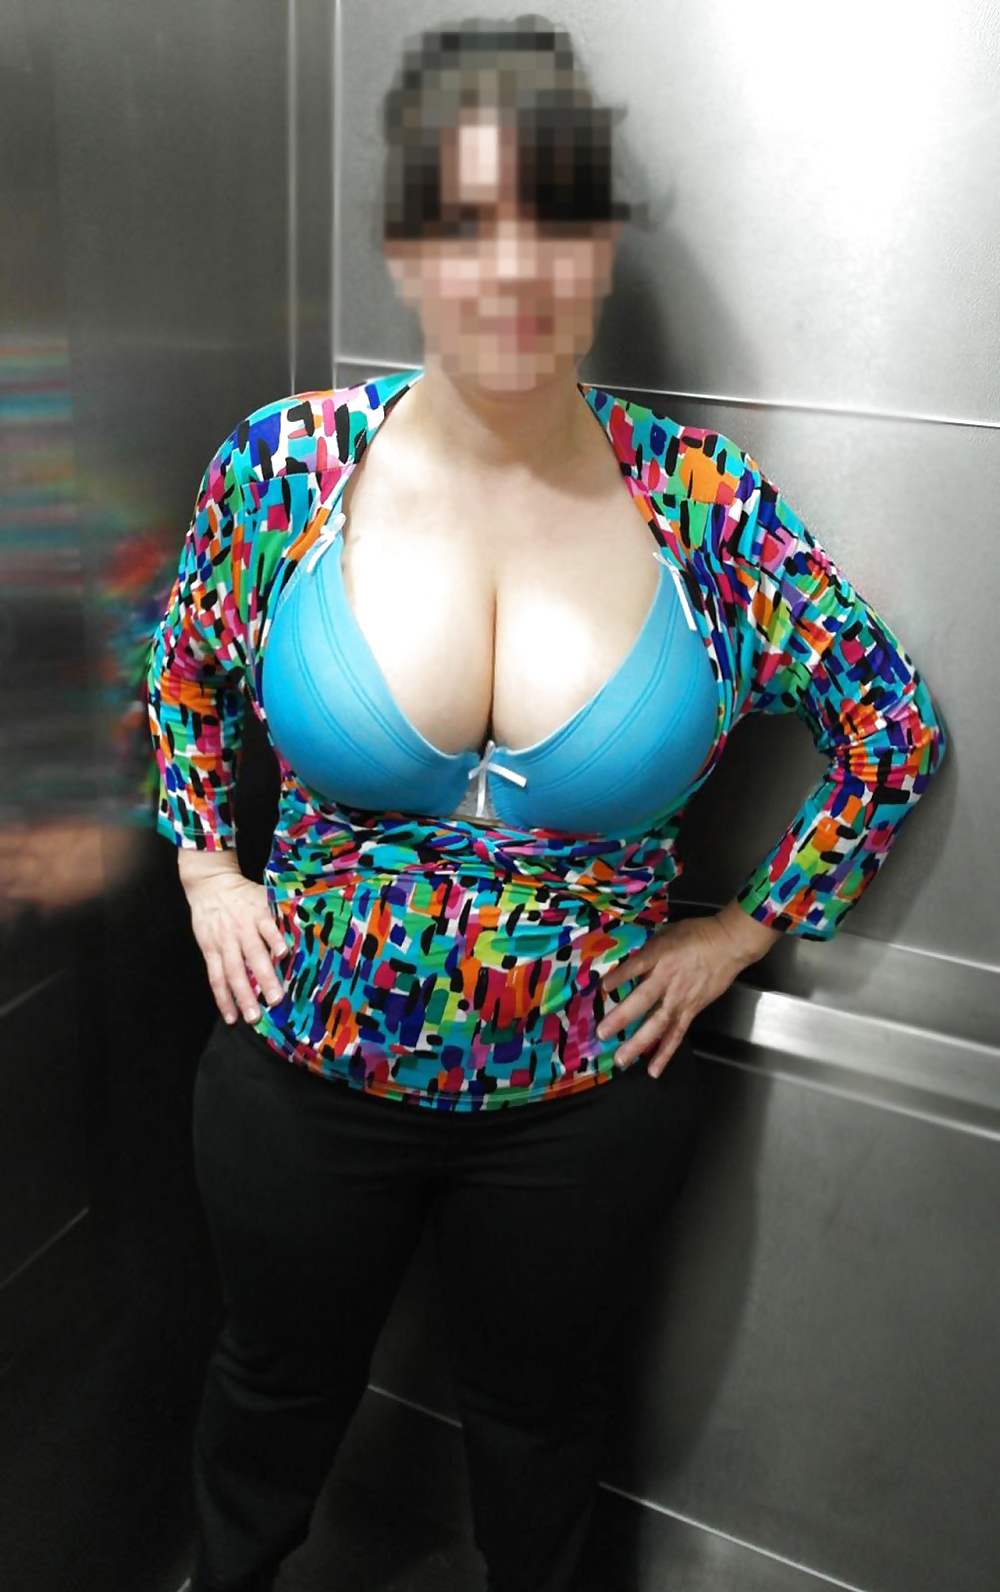 Porn Pics mom flashing her blue bra in elevator